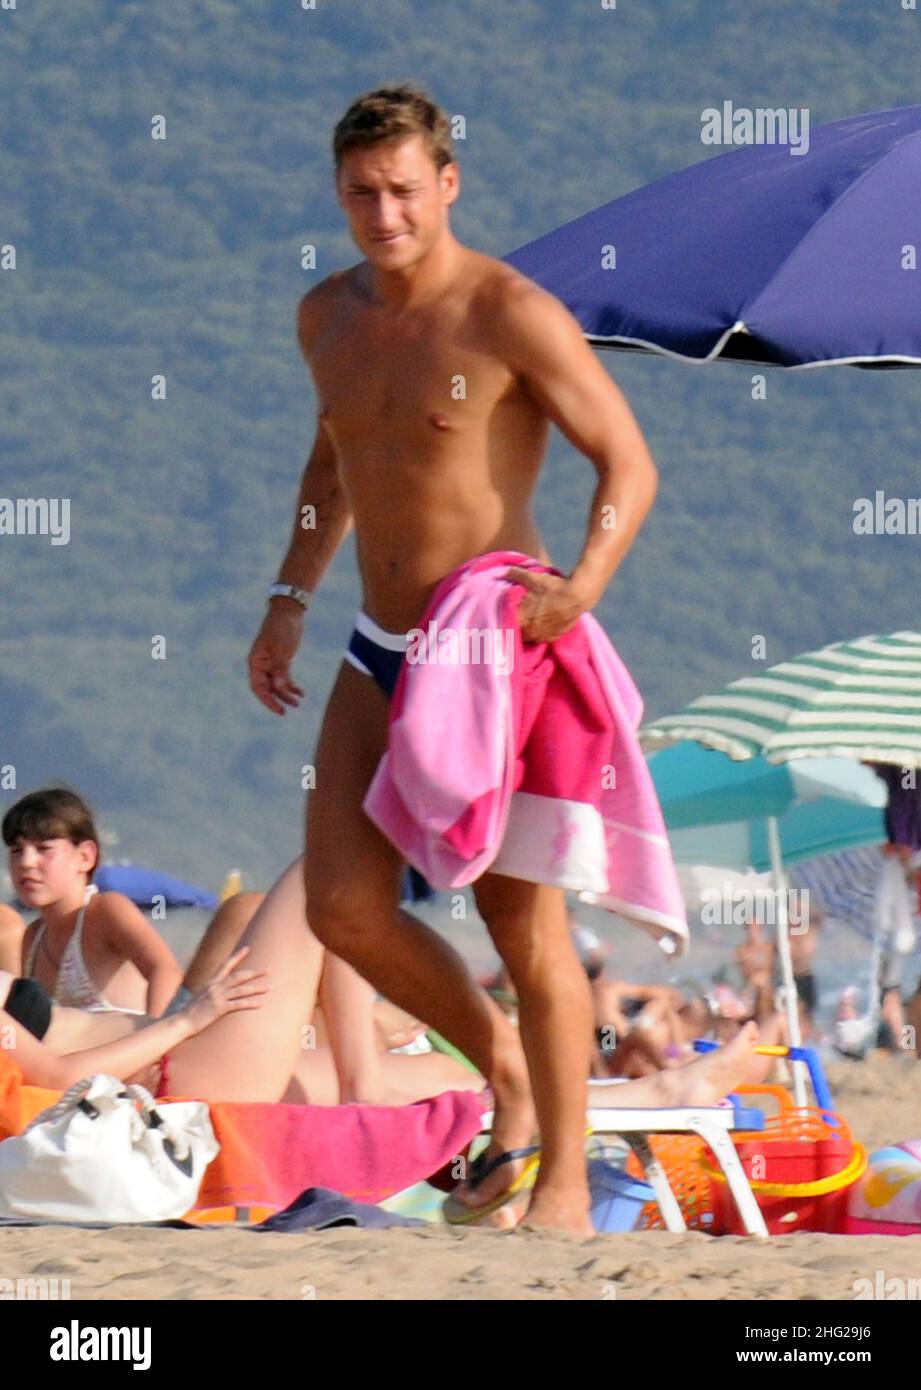 Italian soccer palyer Francesco Totti having an ice cream with friend Alessandra Pierelli on the beach in Sabaudia, Italy. Stock Photo